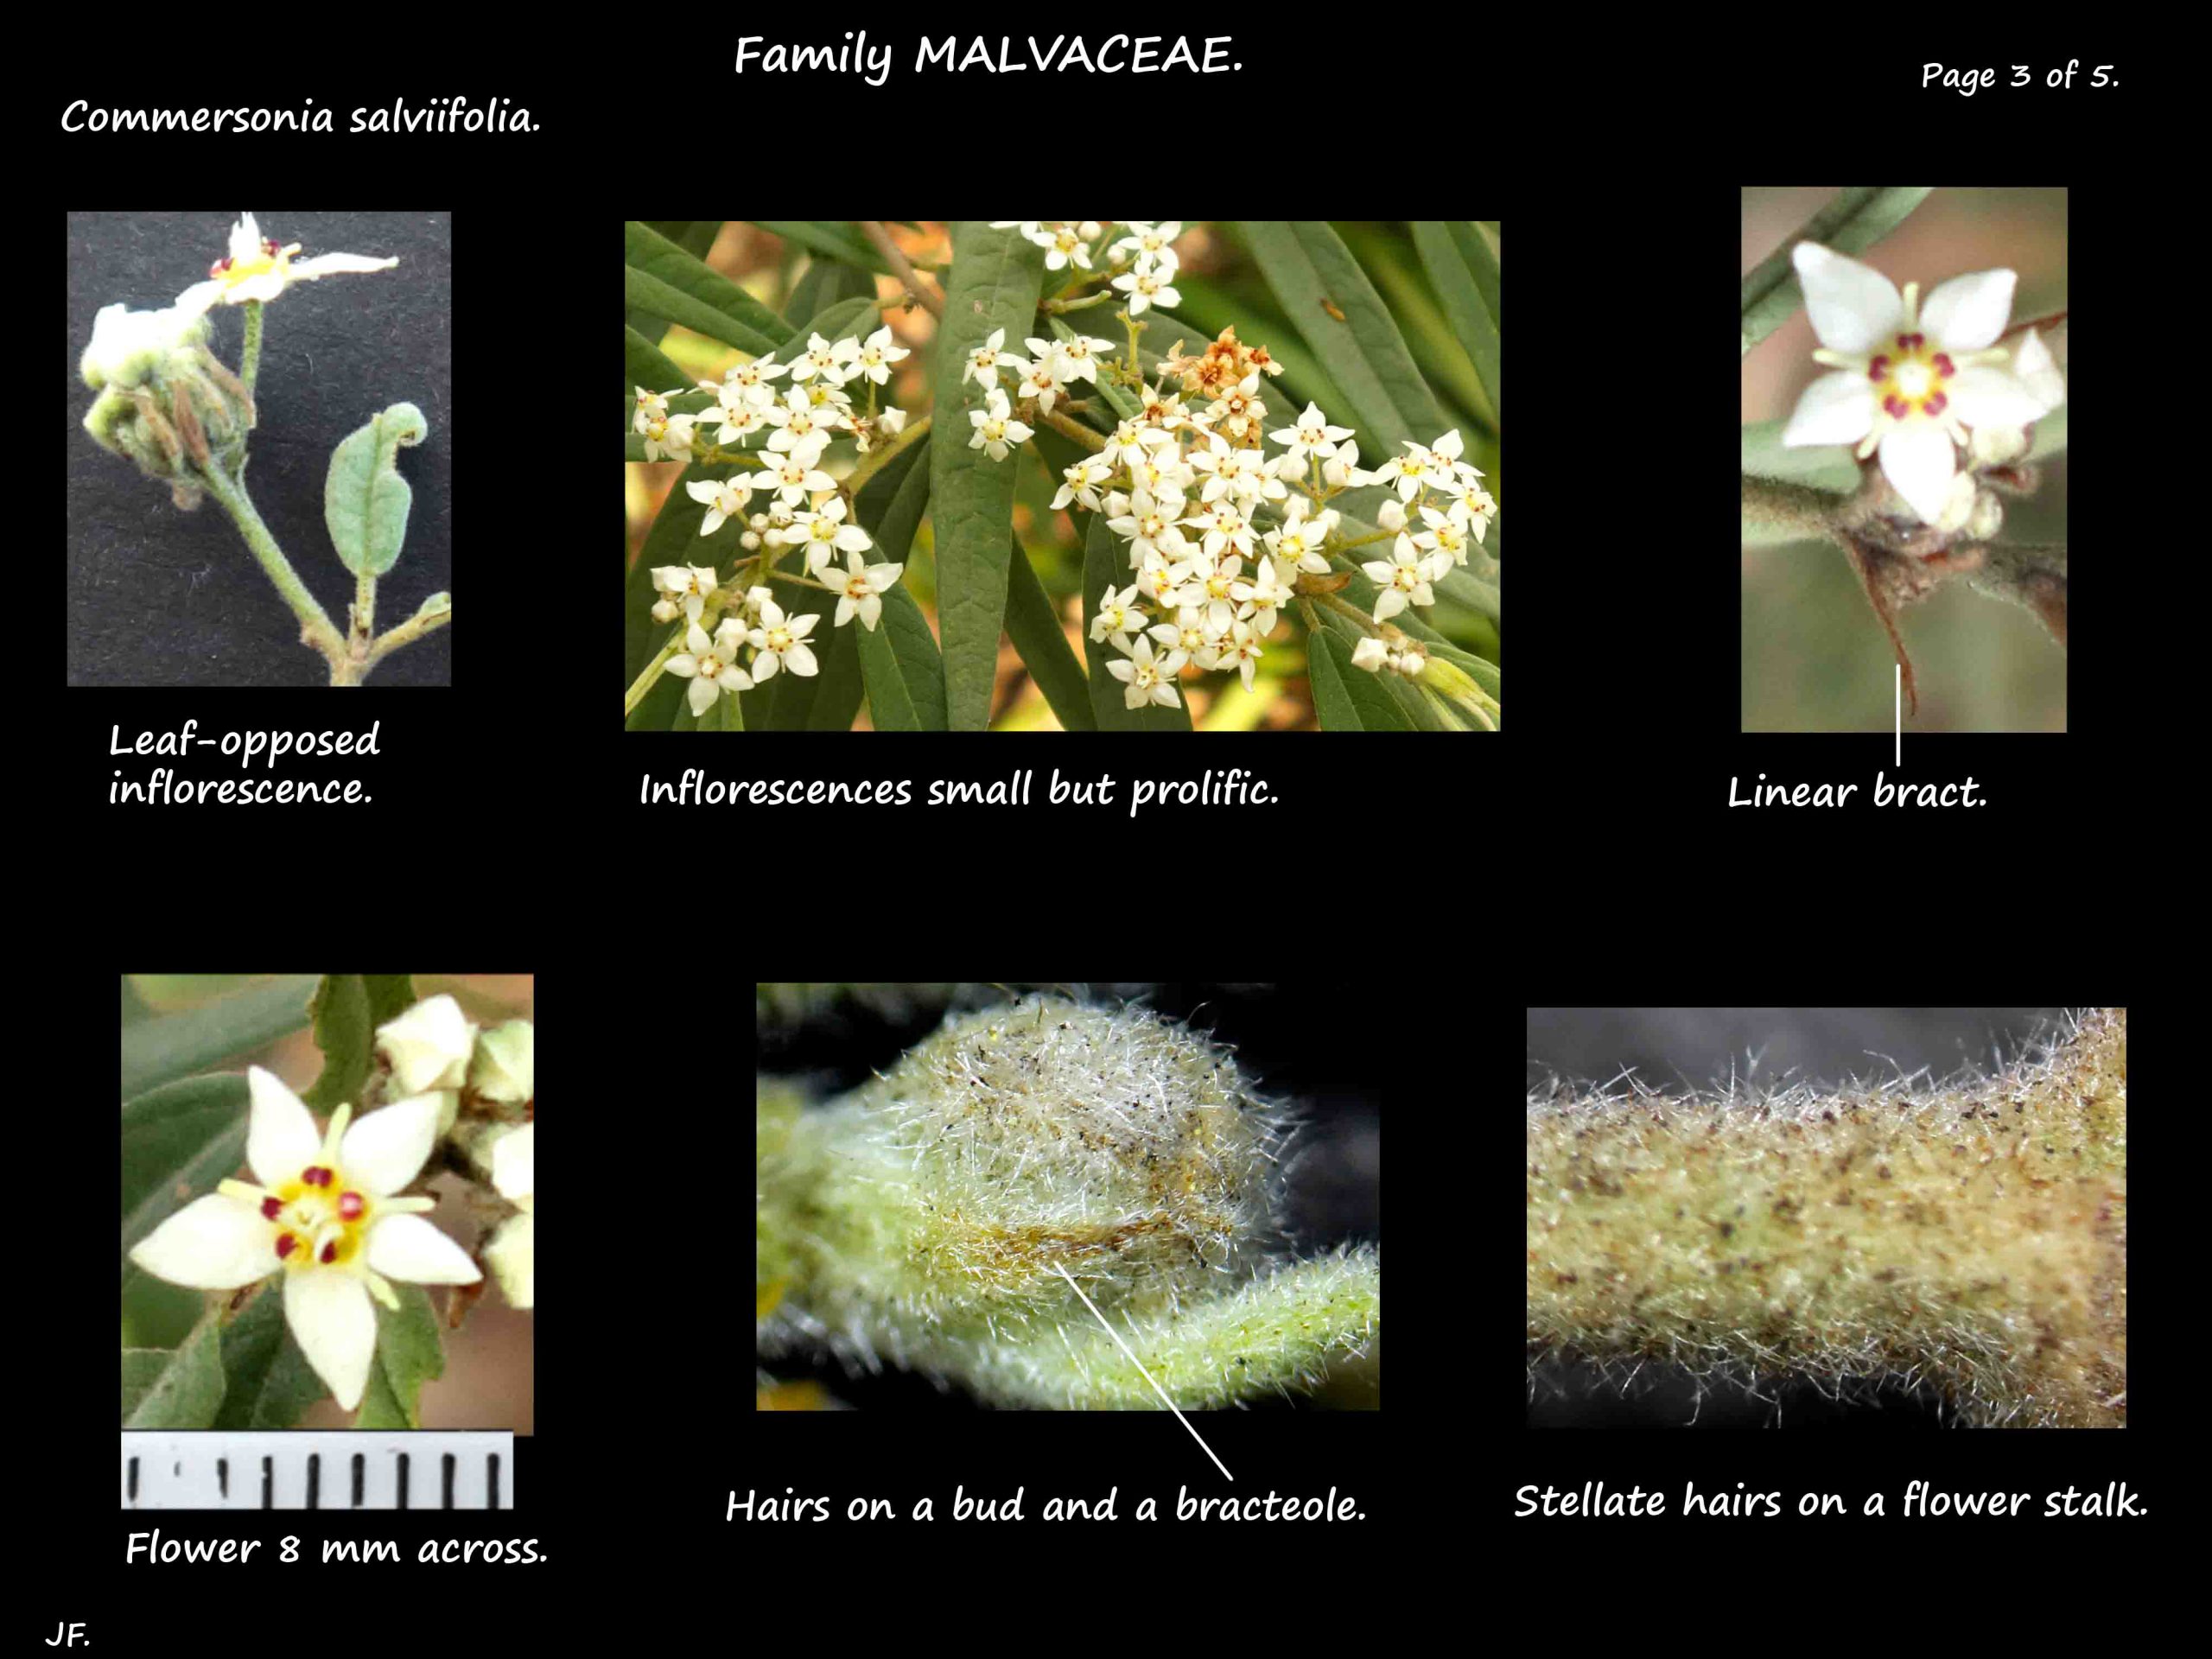 3 Commersonia salviifolia inflorescences